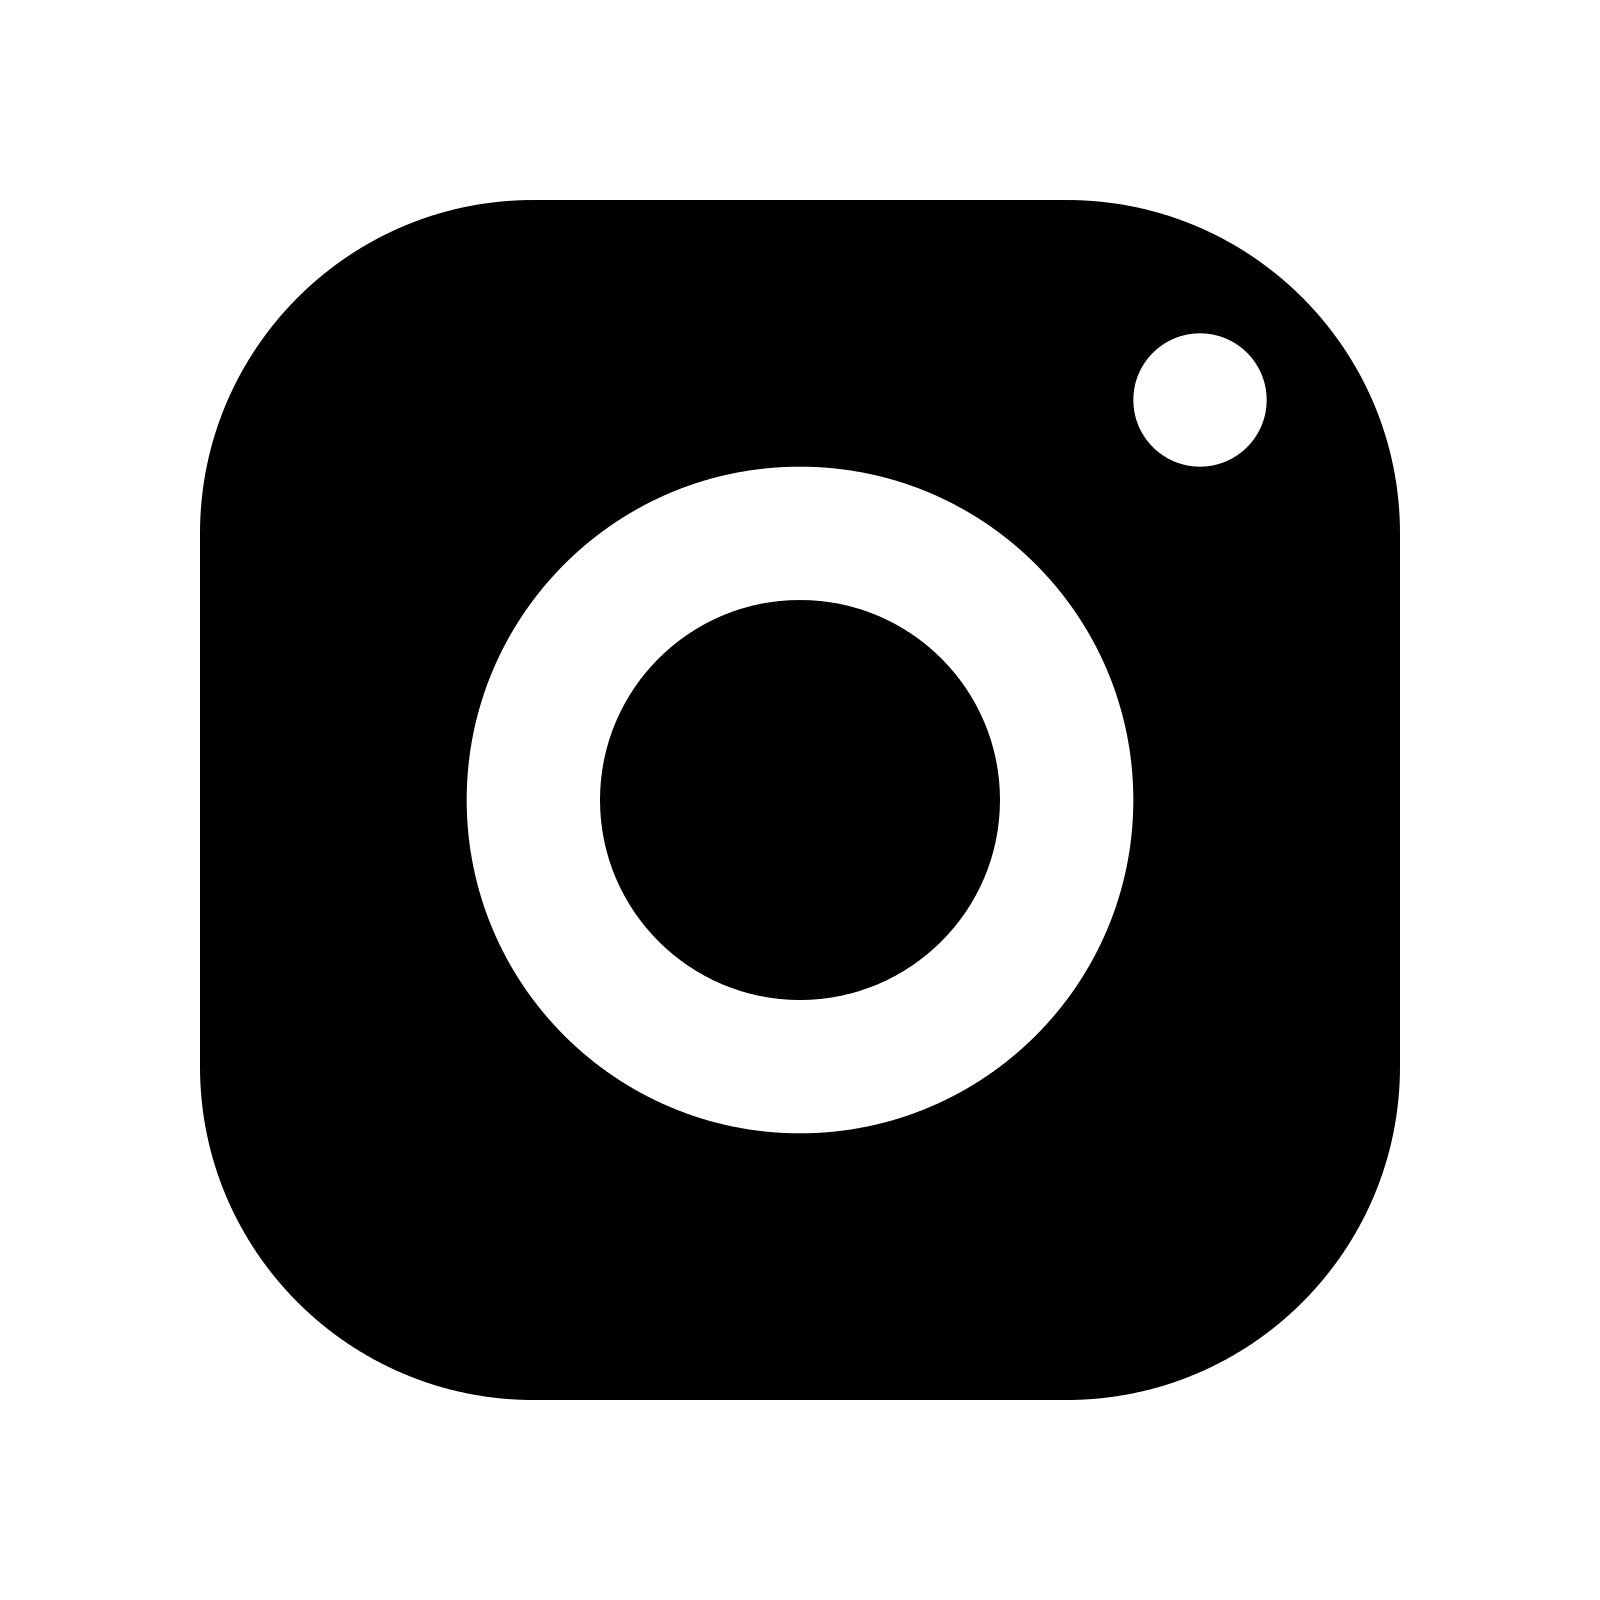 2018 white instagram logo png transparent background